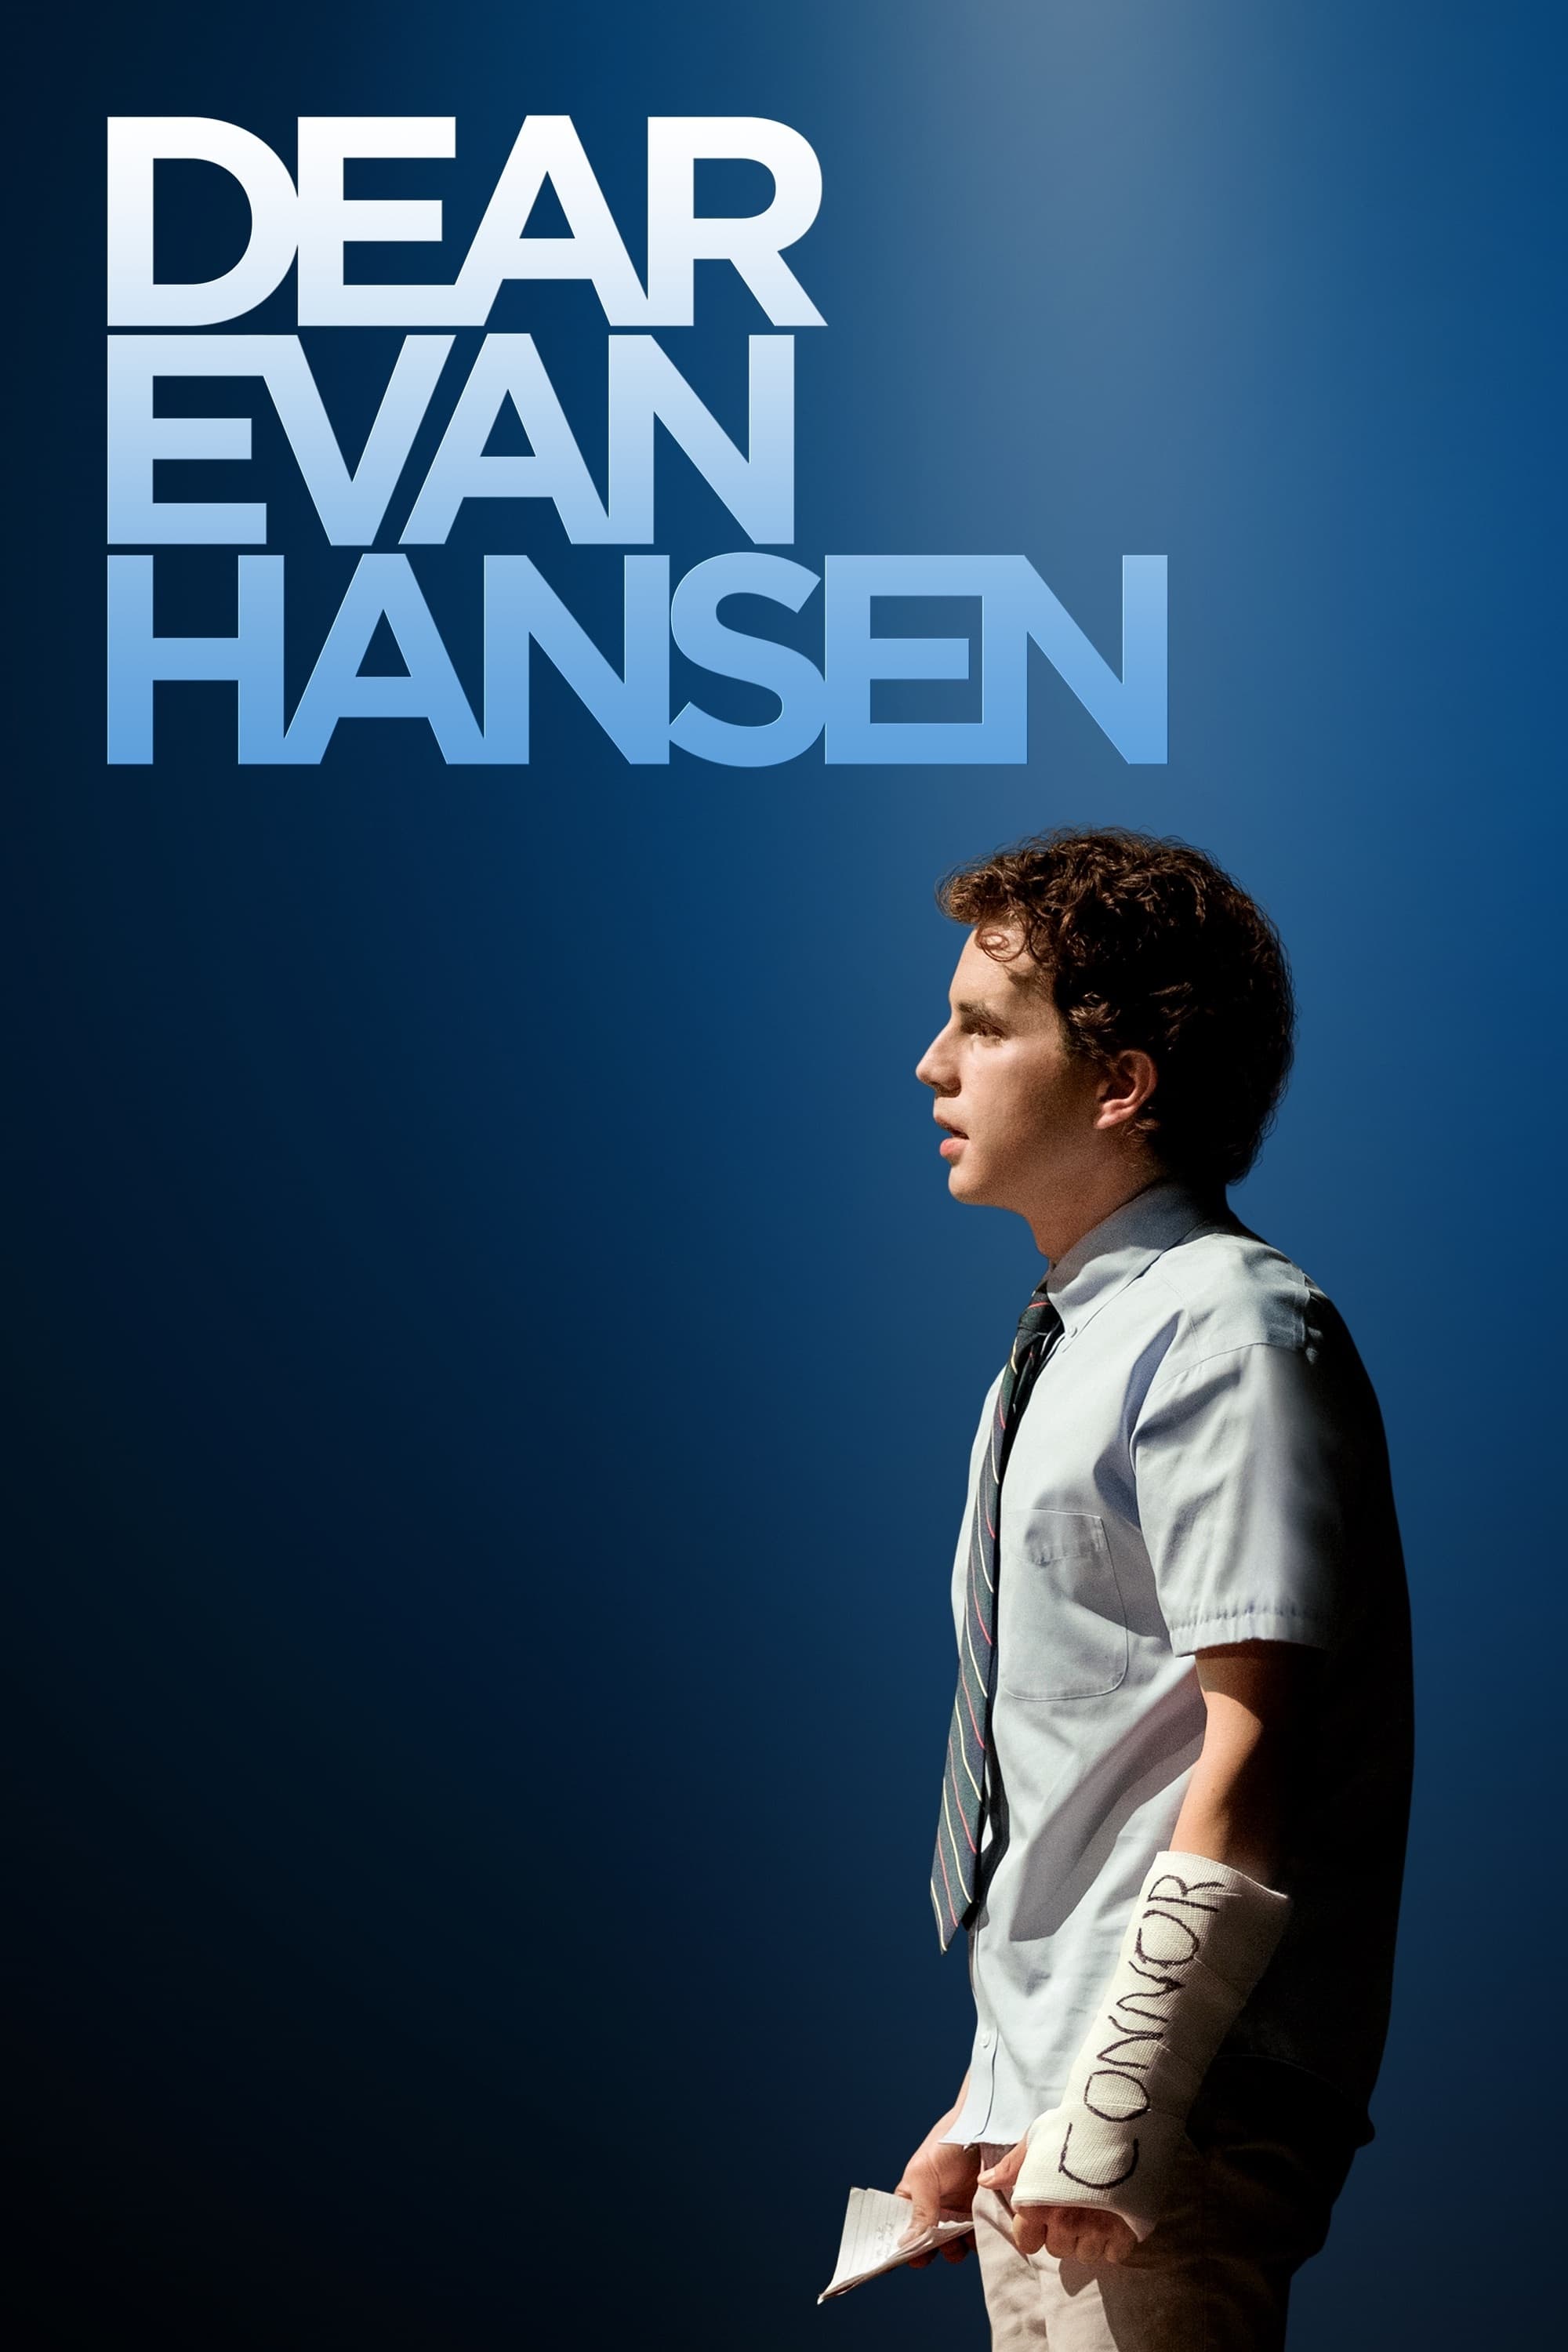 Evan Hansen Thân Mến (Dear Evan Hansen) [2021]